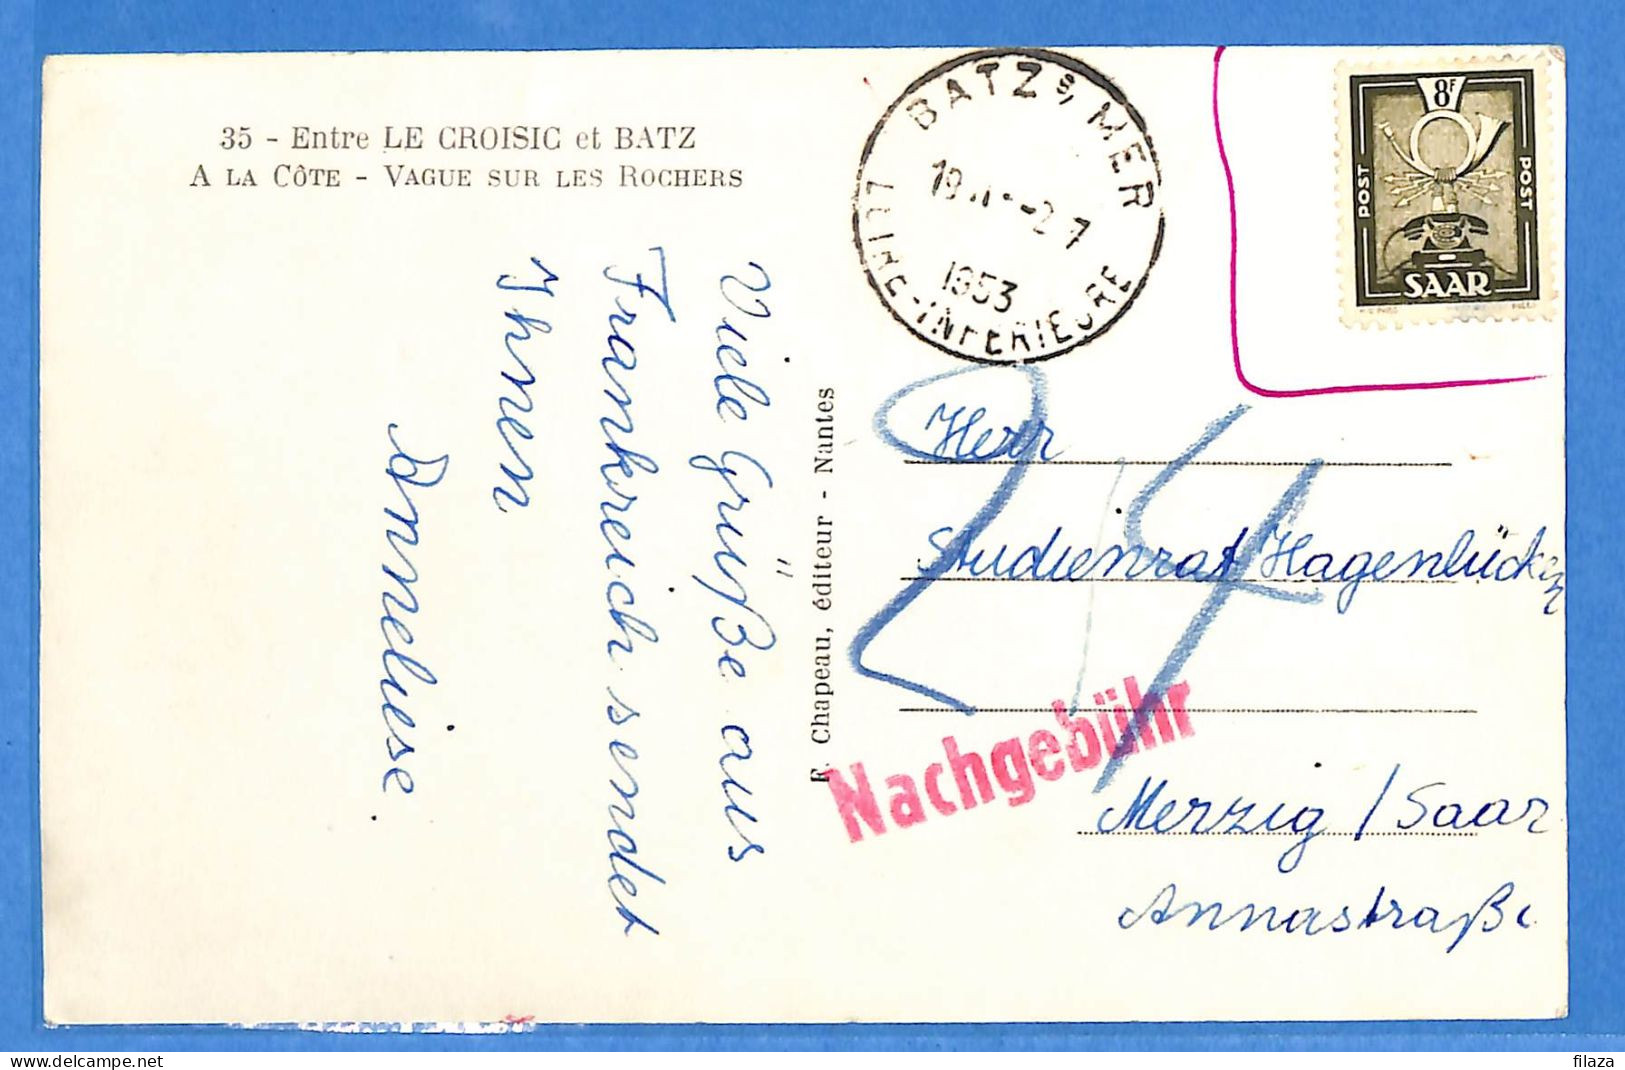 Saar - 1953 - Carte Postale De Batz Sur Mer - G31866 - Briefe U. Dokumente